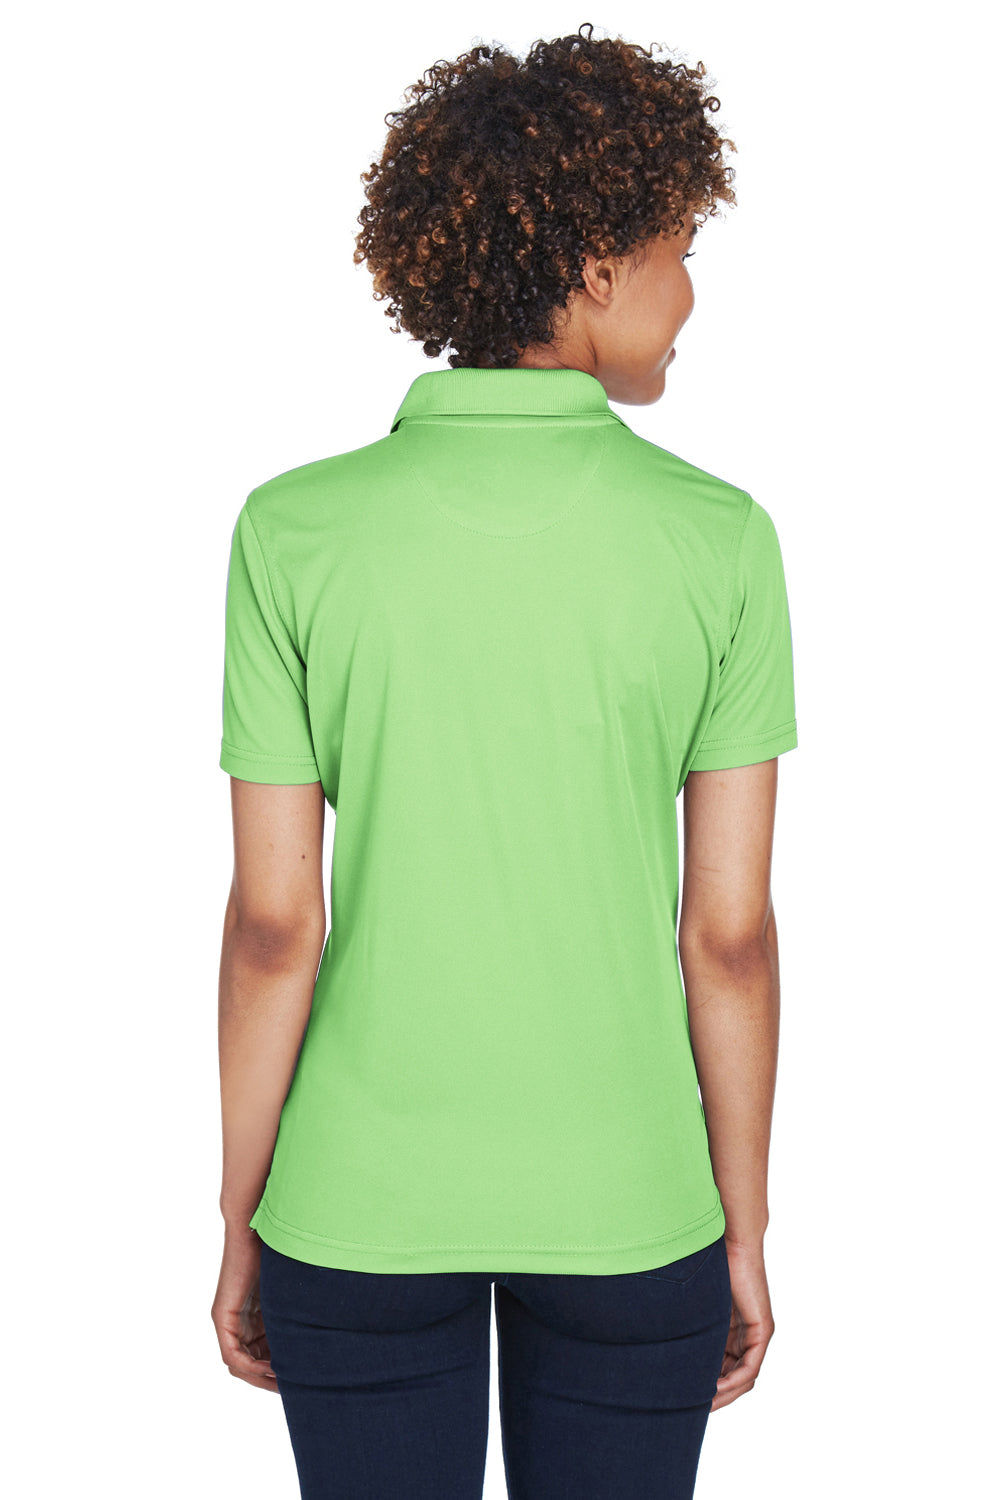 UltraClub 8210L Womens Cool & Dry Moisture Wicking Short Sleeve Polo Shirt Light Green Back